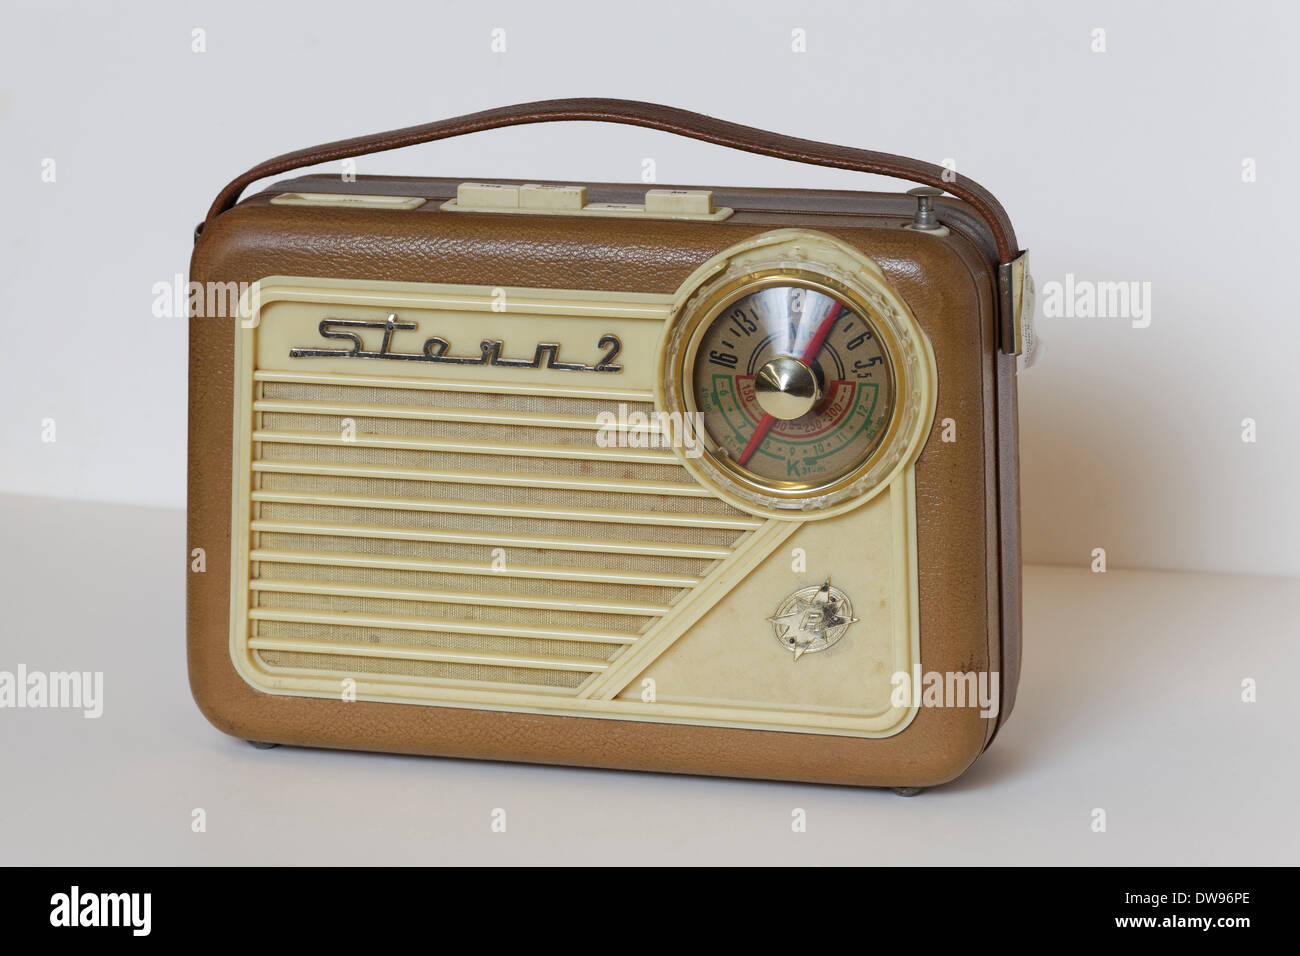 Portable radio of the GDR brand Stern Radio Rochlitz from 1960, Stern 2 model, Radio Museum Duisburg, North Rhine-Westphalia Stock Photo